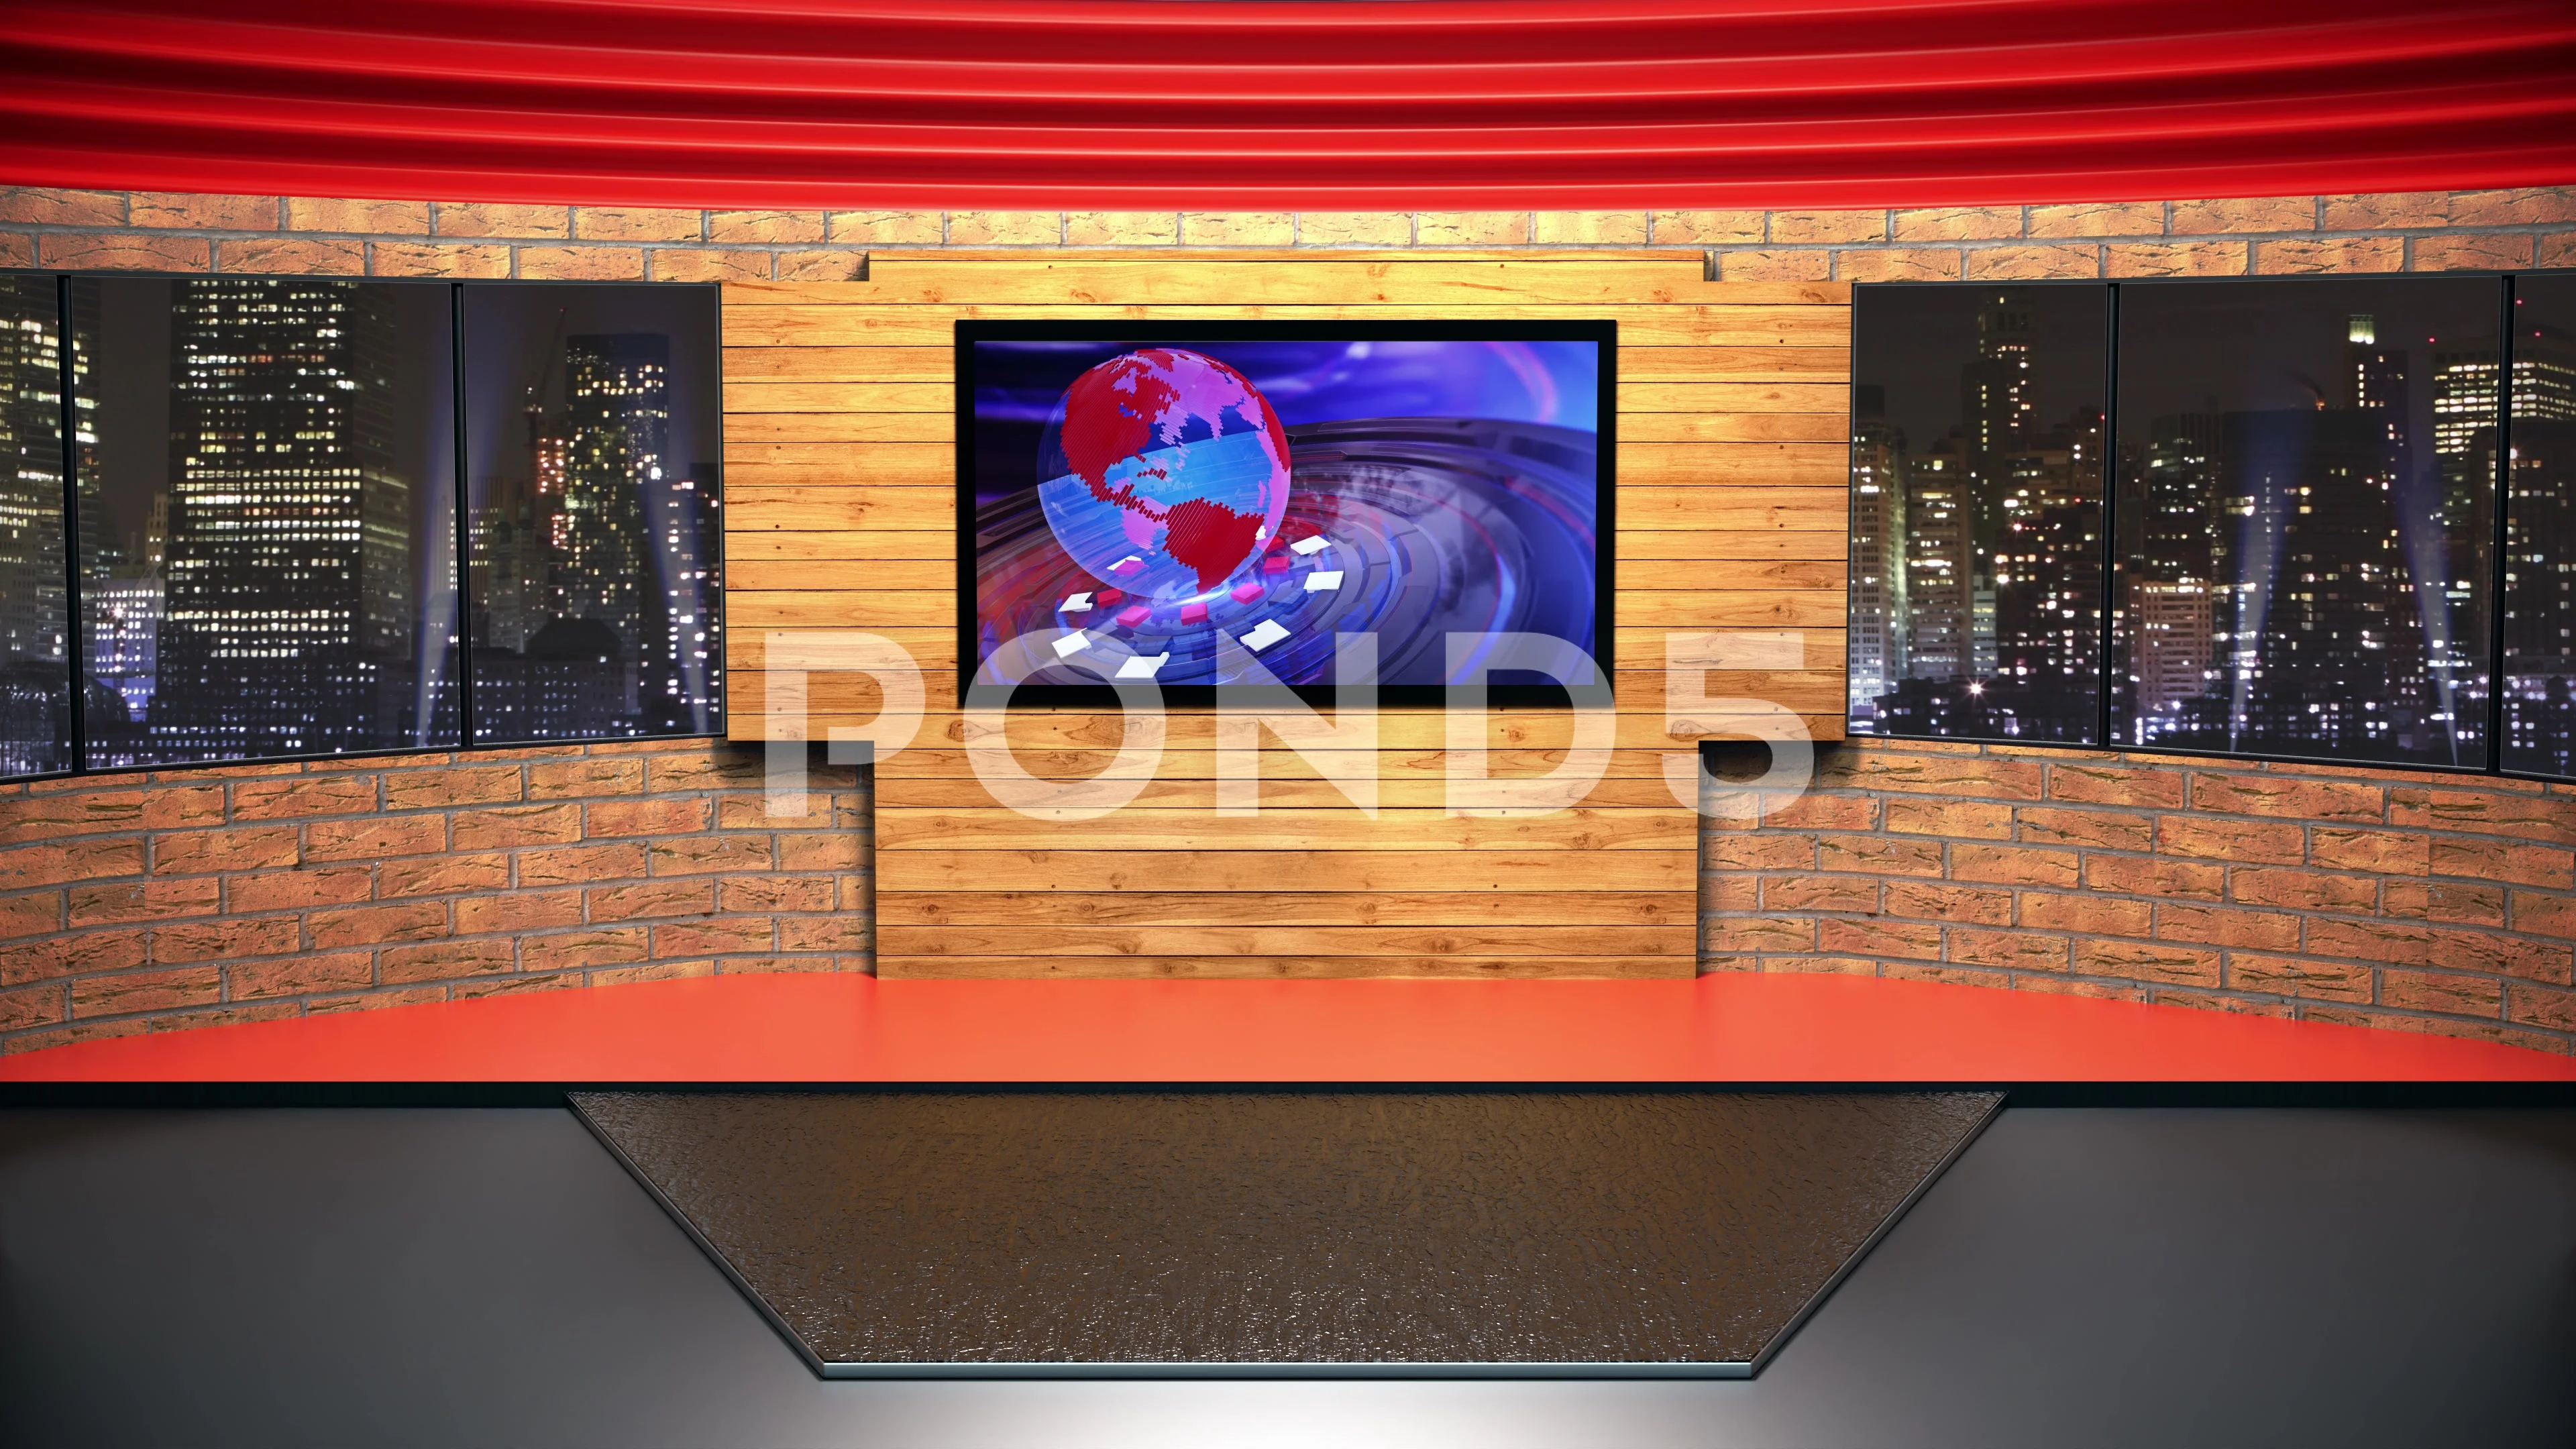 news-studio-backdrop-shows-wall-virtual-news-studio-background